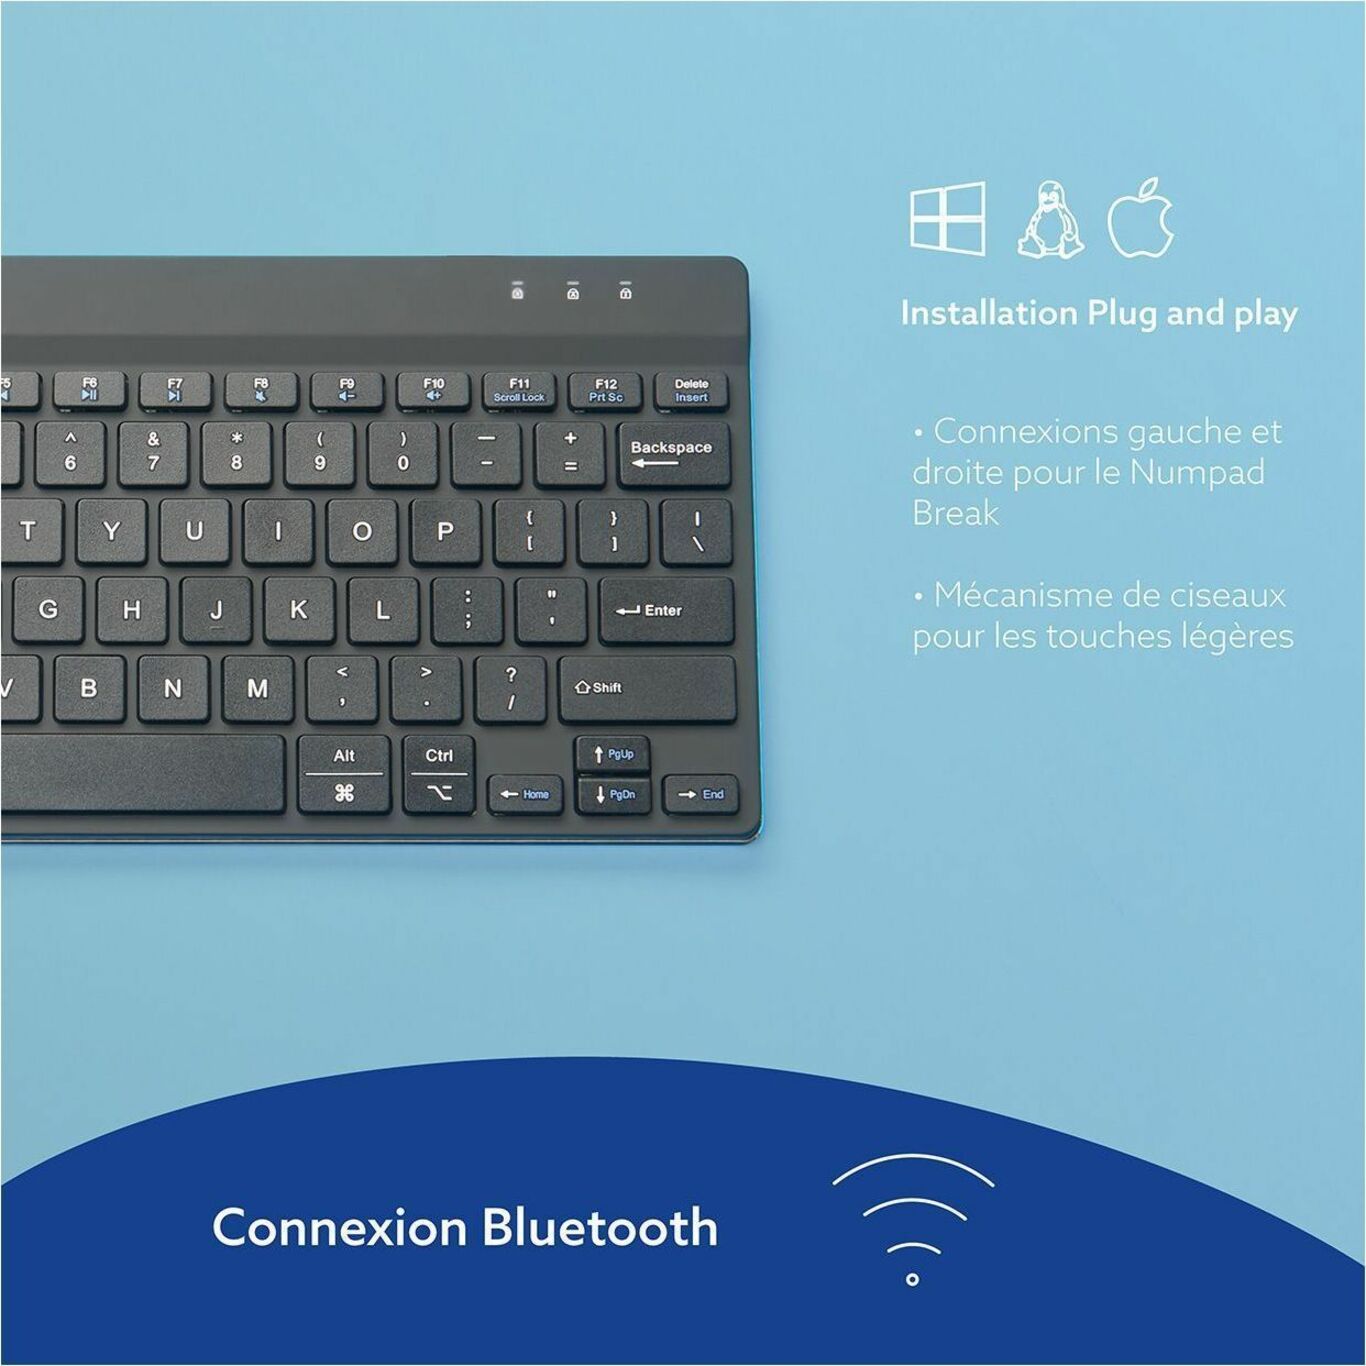 R-Go RGOCOUSWLBL Compact Break Keyboard QWERTY (US), Black, Wireless - Lightweight, Ergonomic, LED Backlight